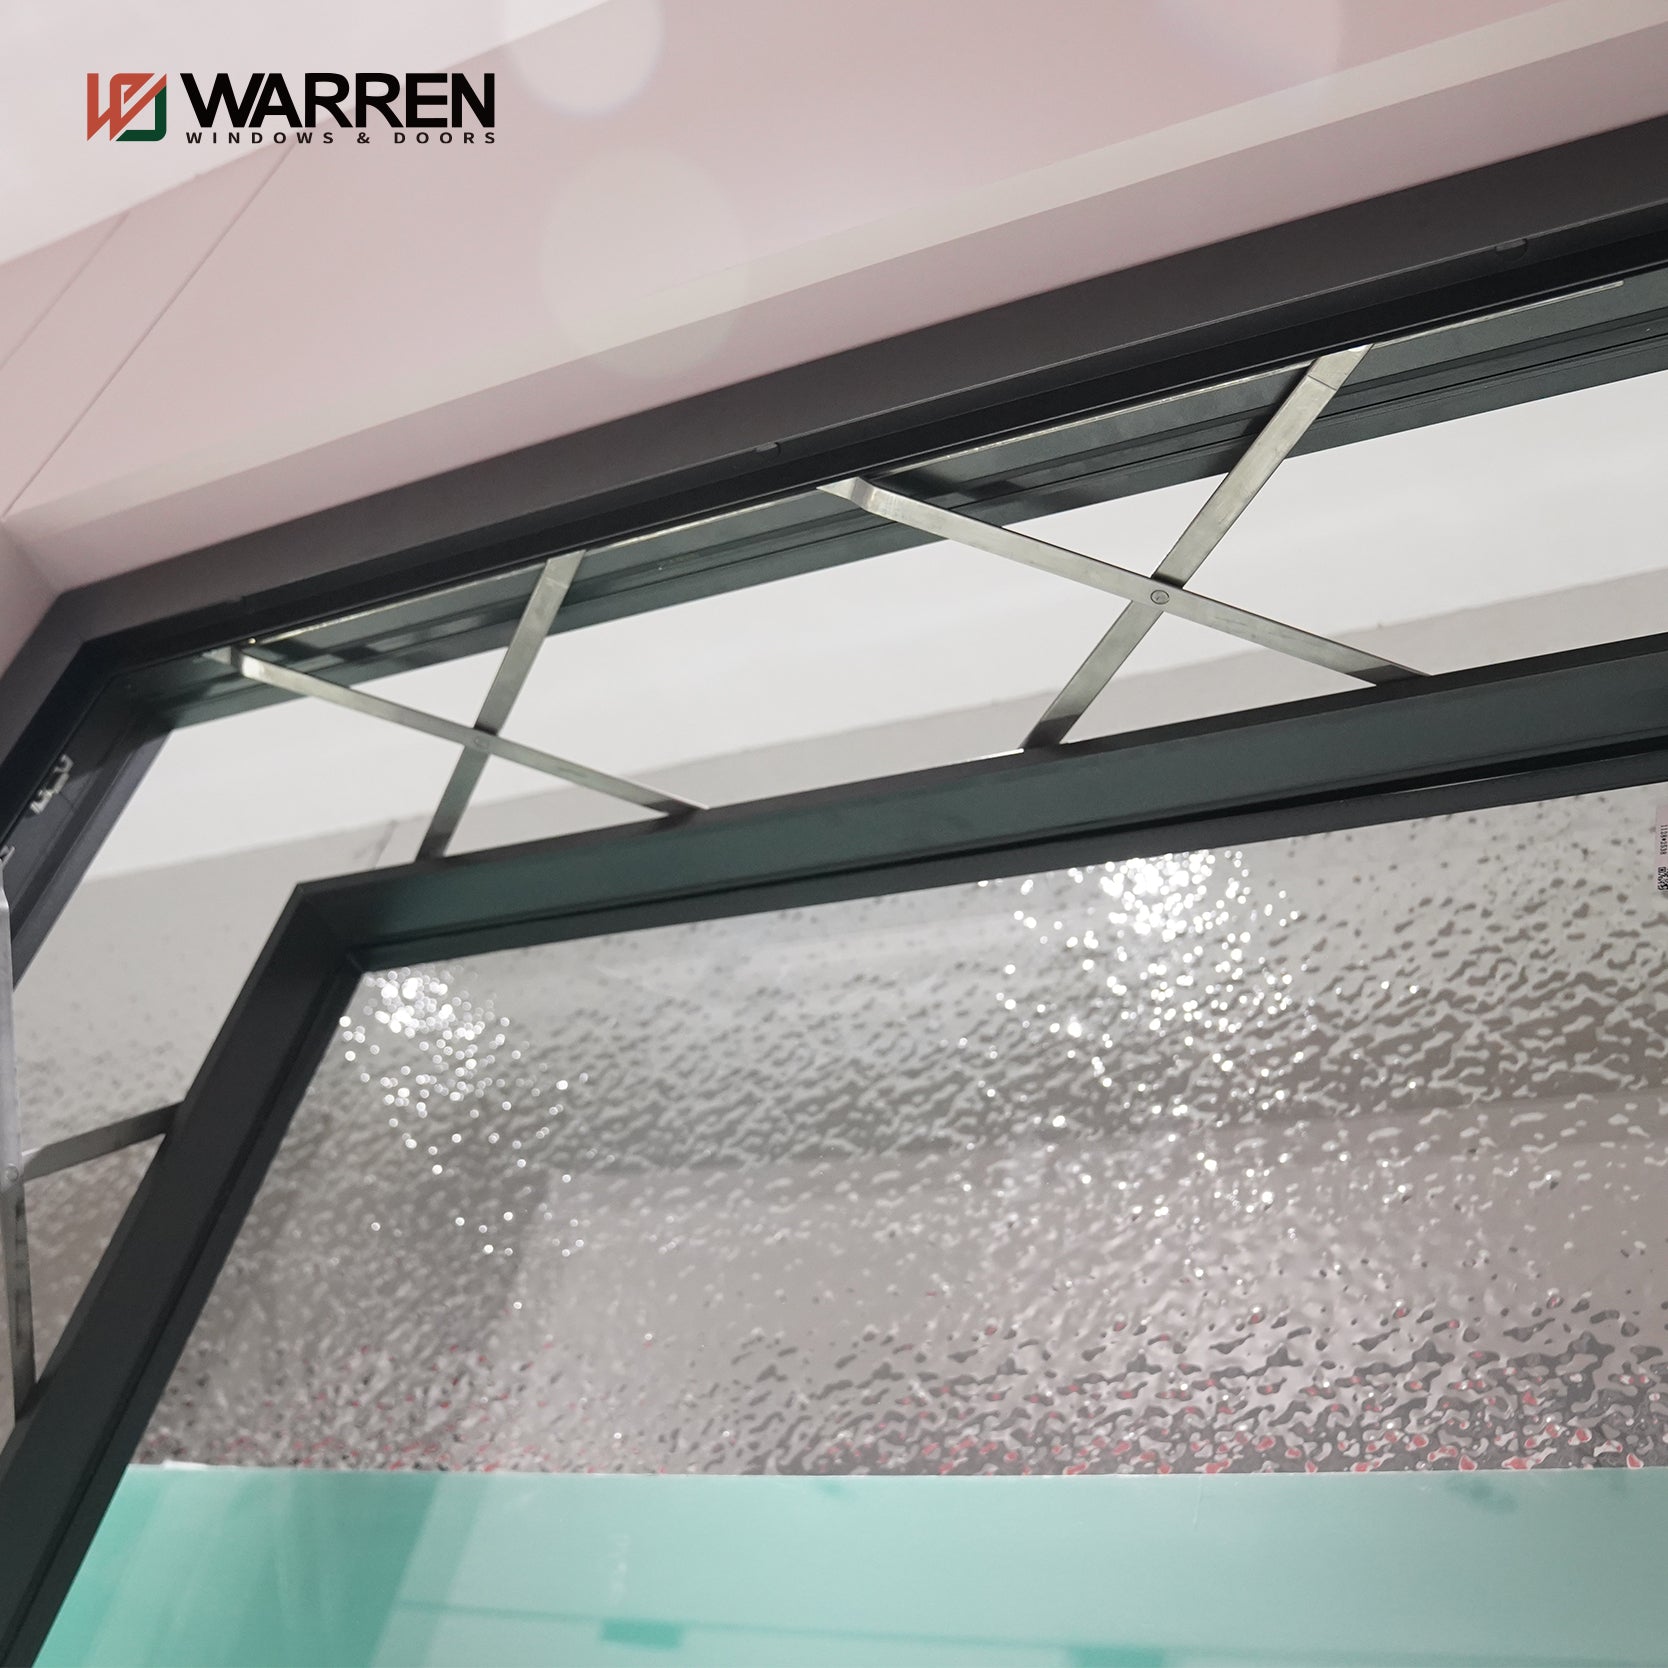 Warren New China Manufacturer Aluminium Casement Window Aluminum Windows Canopy Awning Casement Window